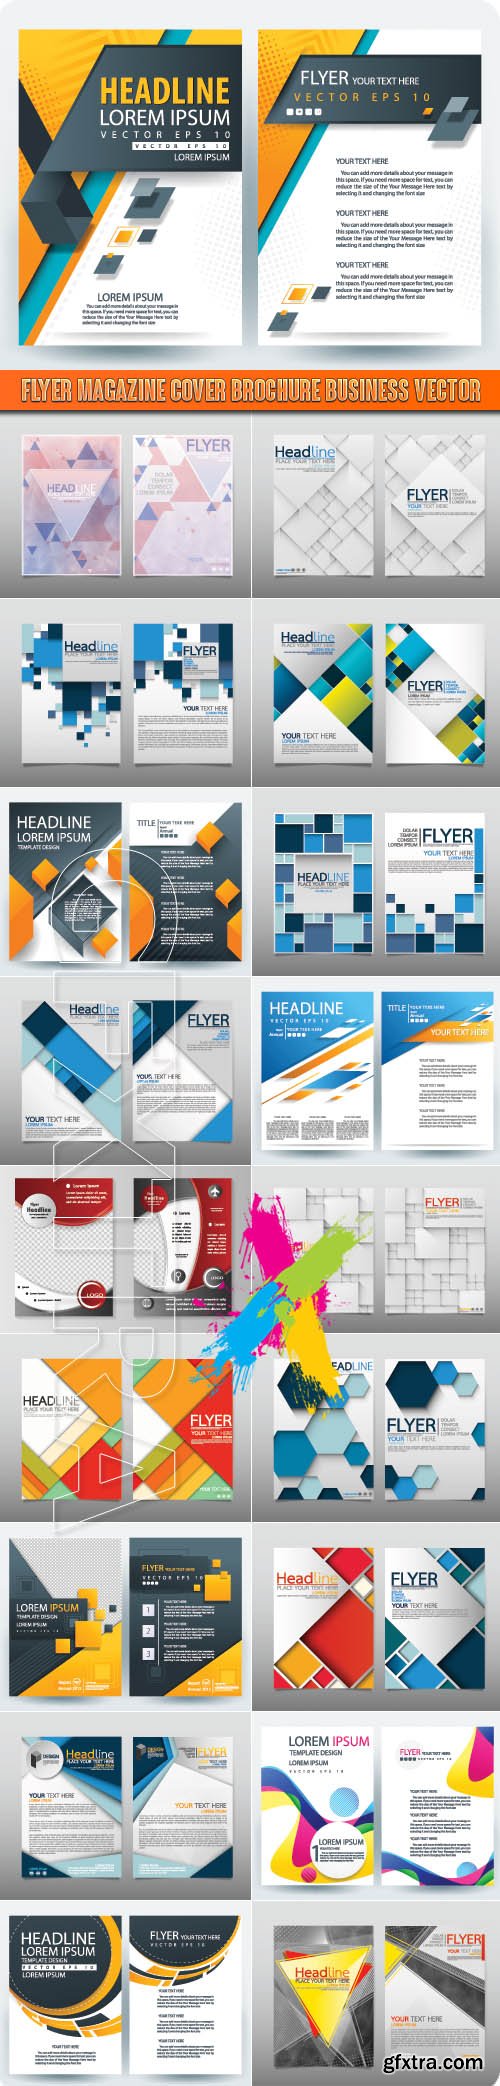 Flyer magazine cover brochure business vector